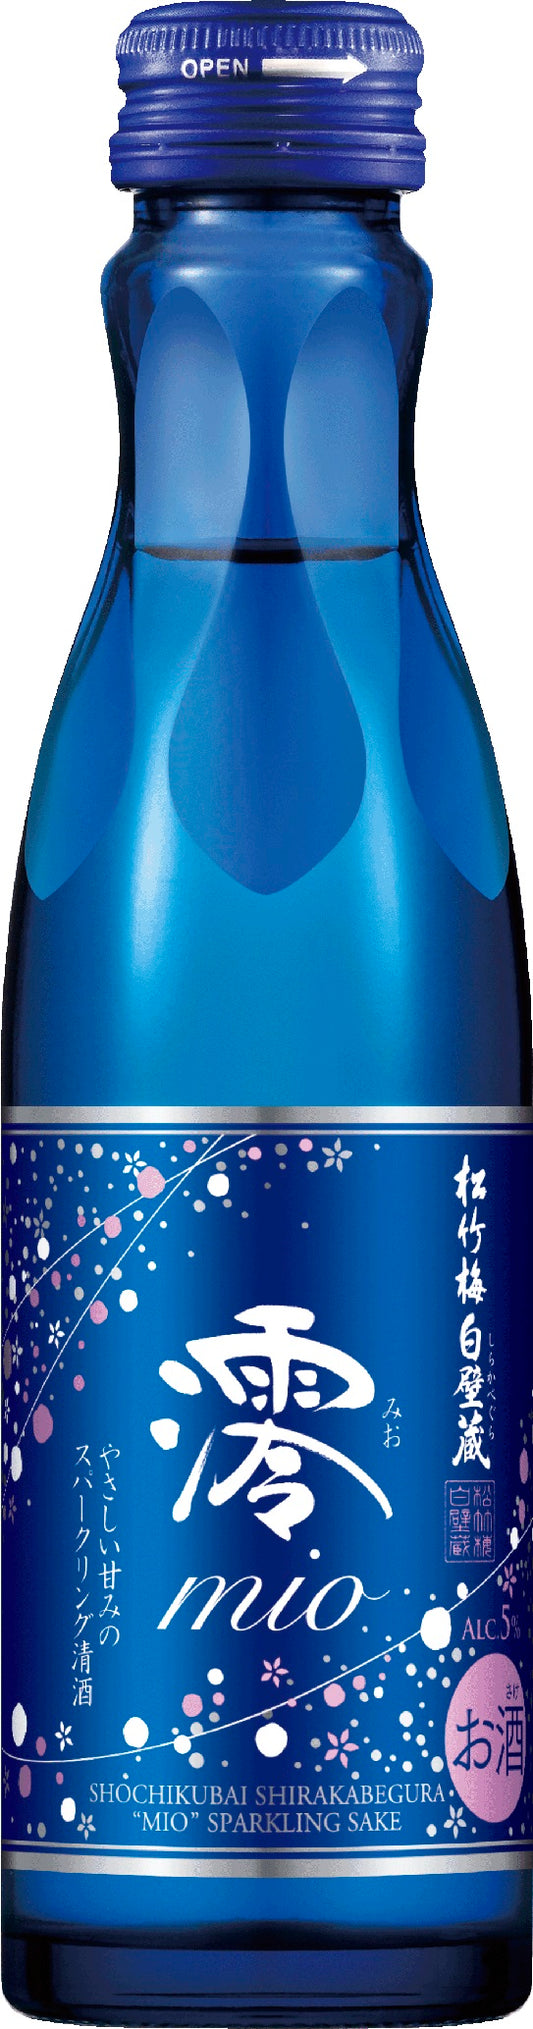 Shirakabegura MIO Sparkling Sake 150ml 5.1%